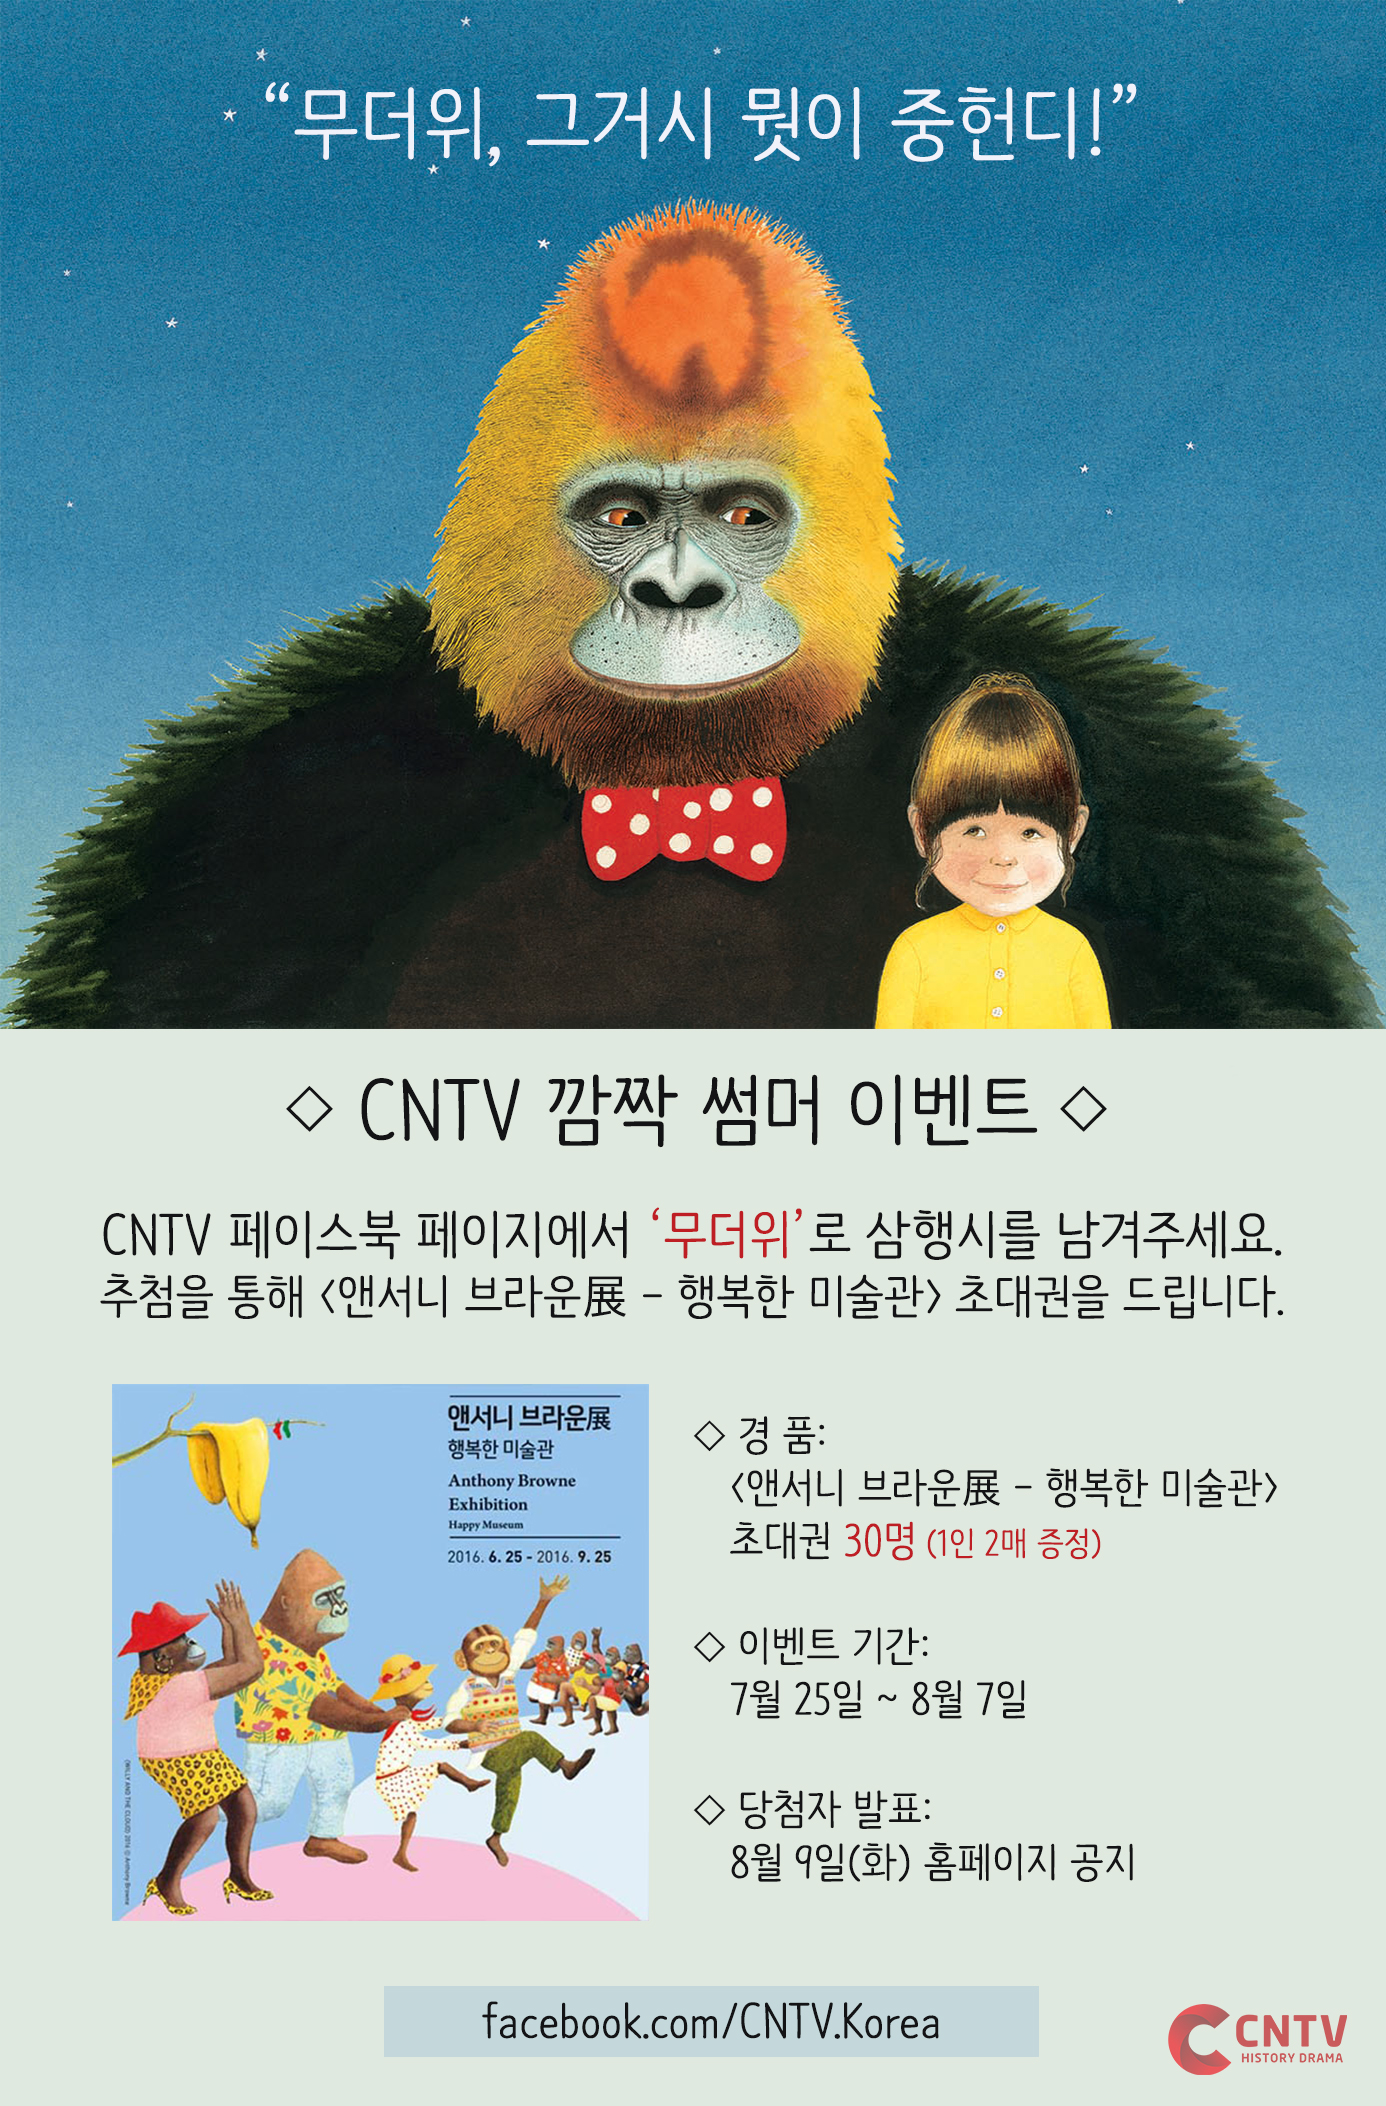 CNTV_event_img2.jpg